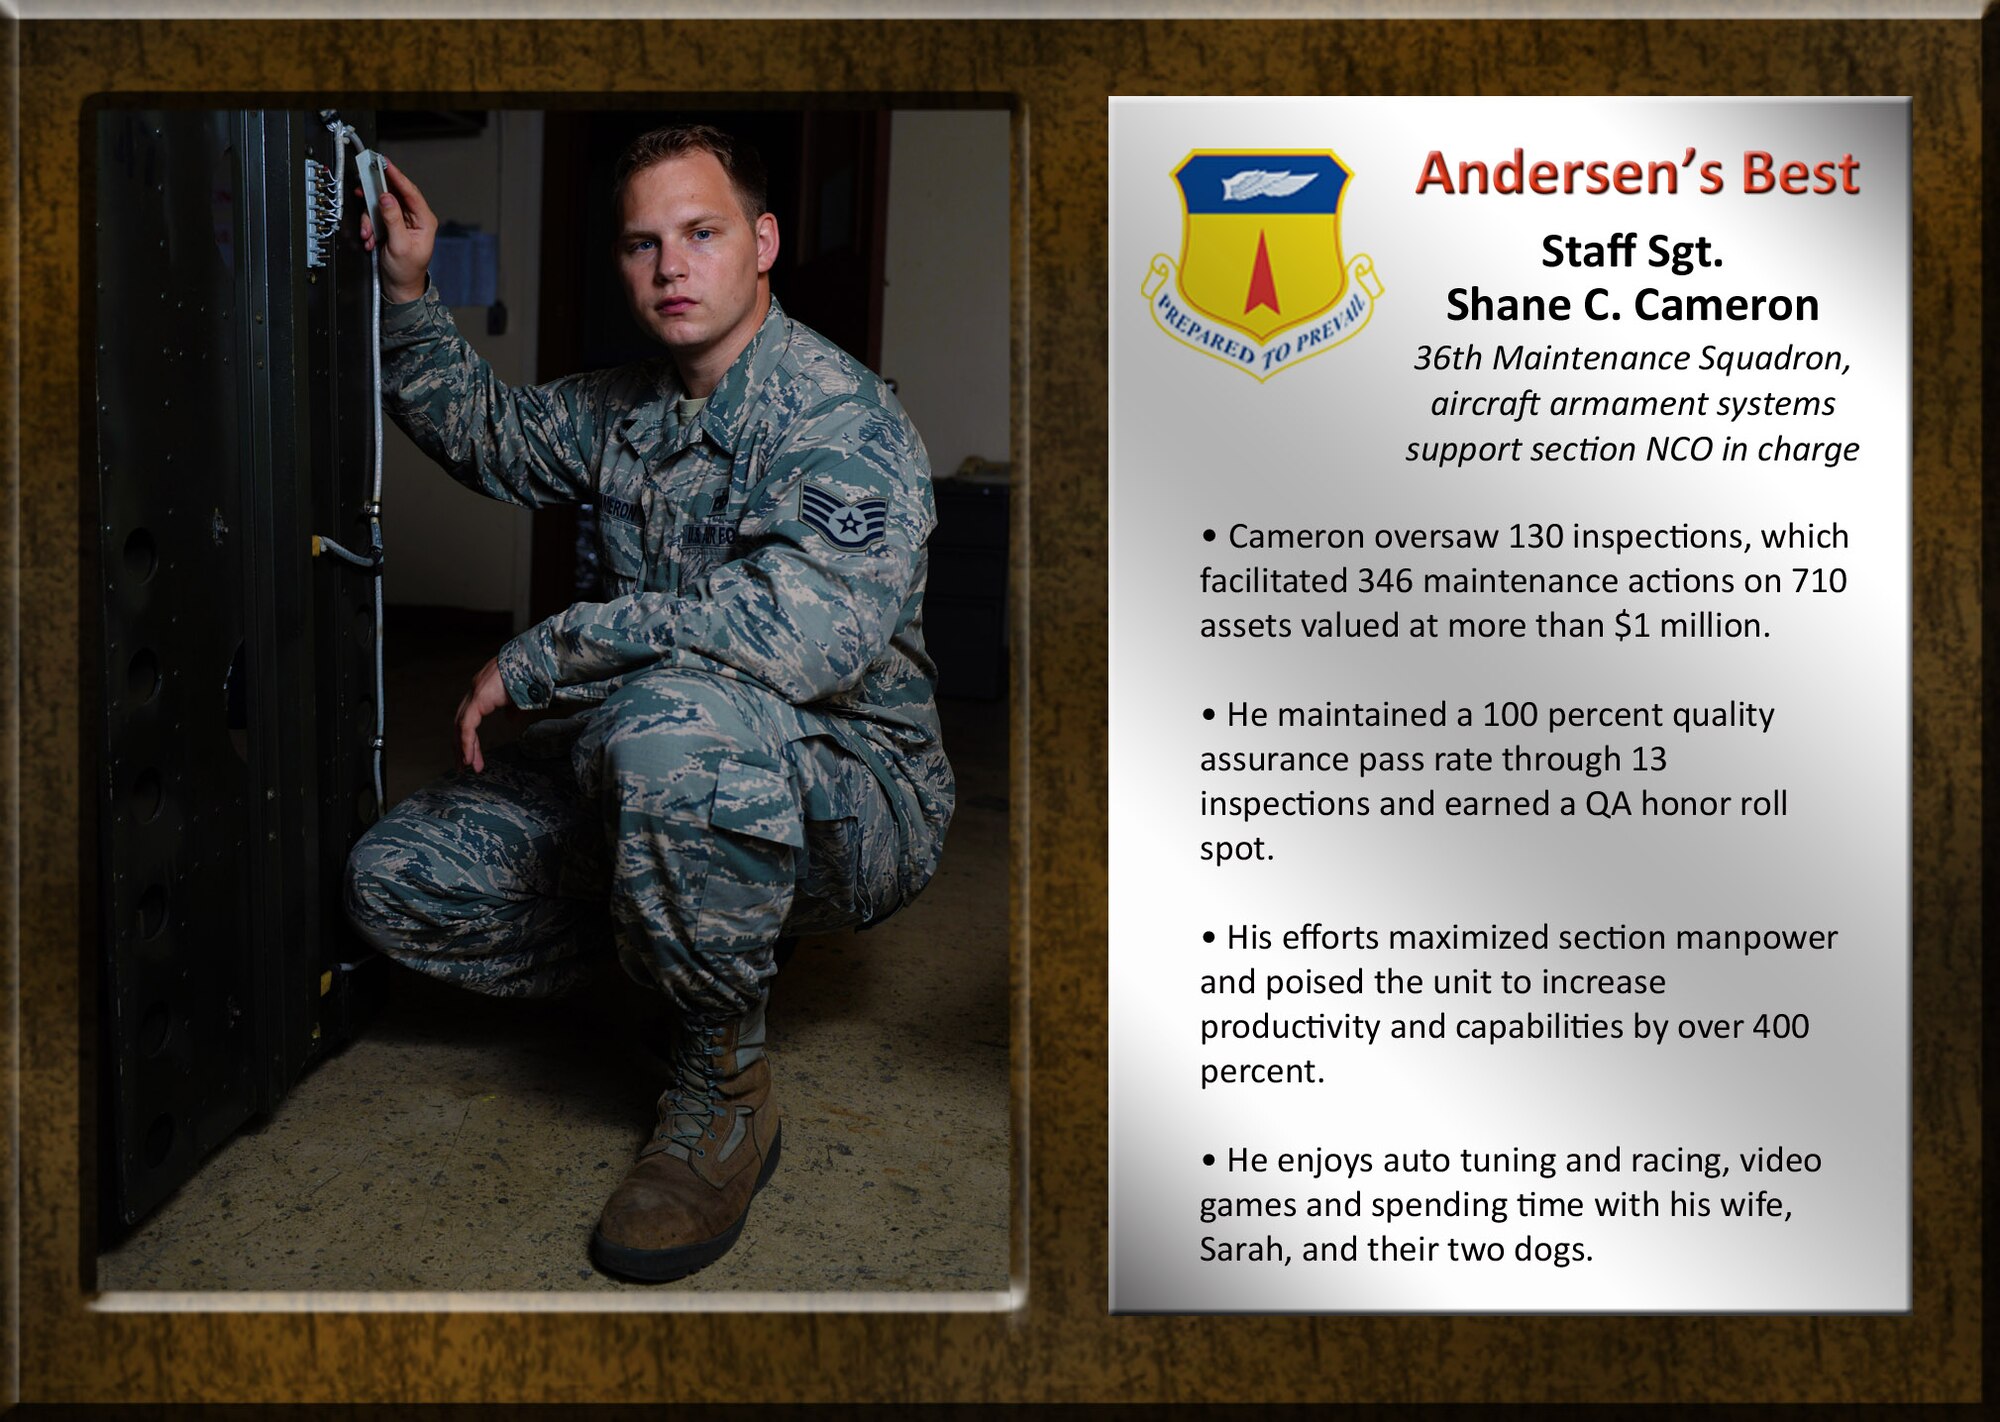 Team Andersen's Best: Staff Sgt. Shane C. Cameron